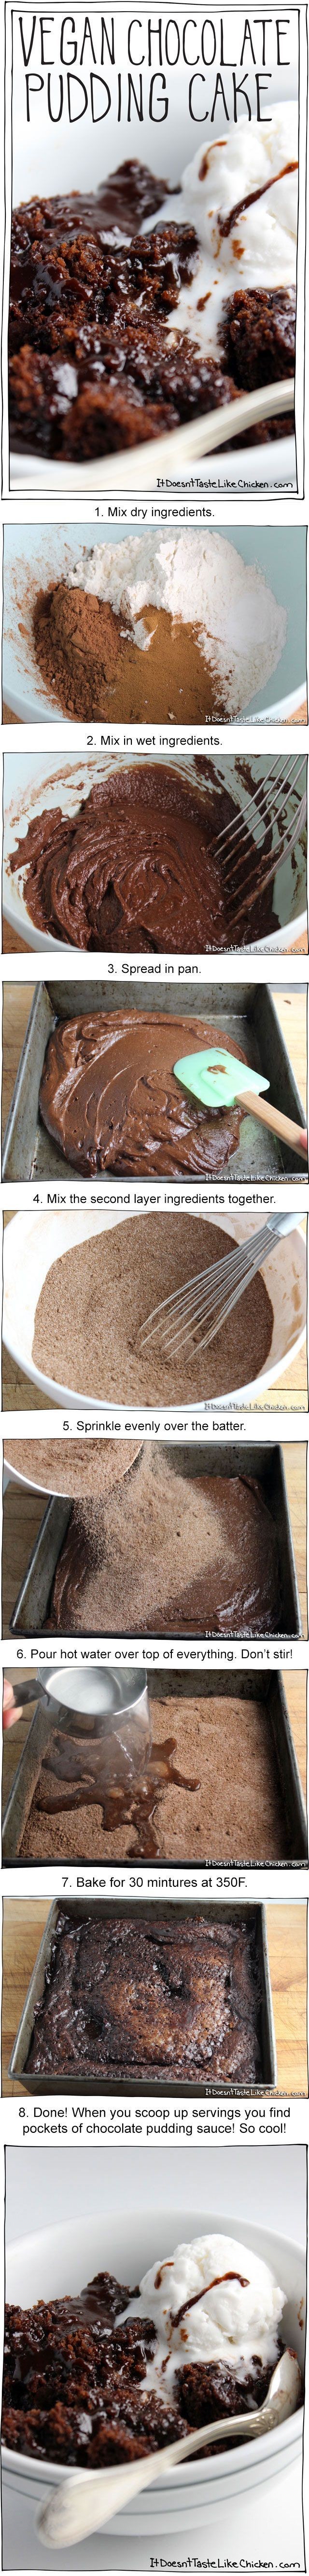 Vegan Chocolate Pudding Cake. This cake is so amaz...